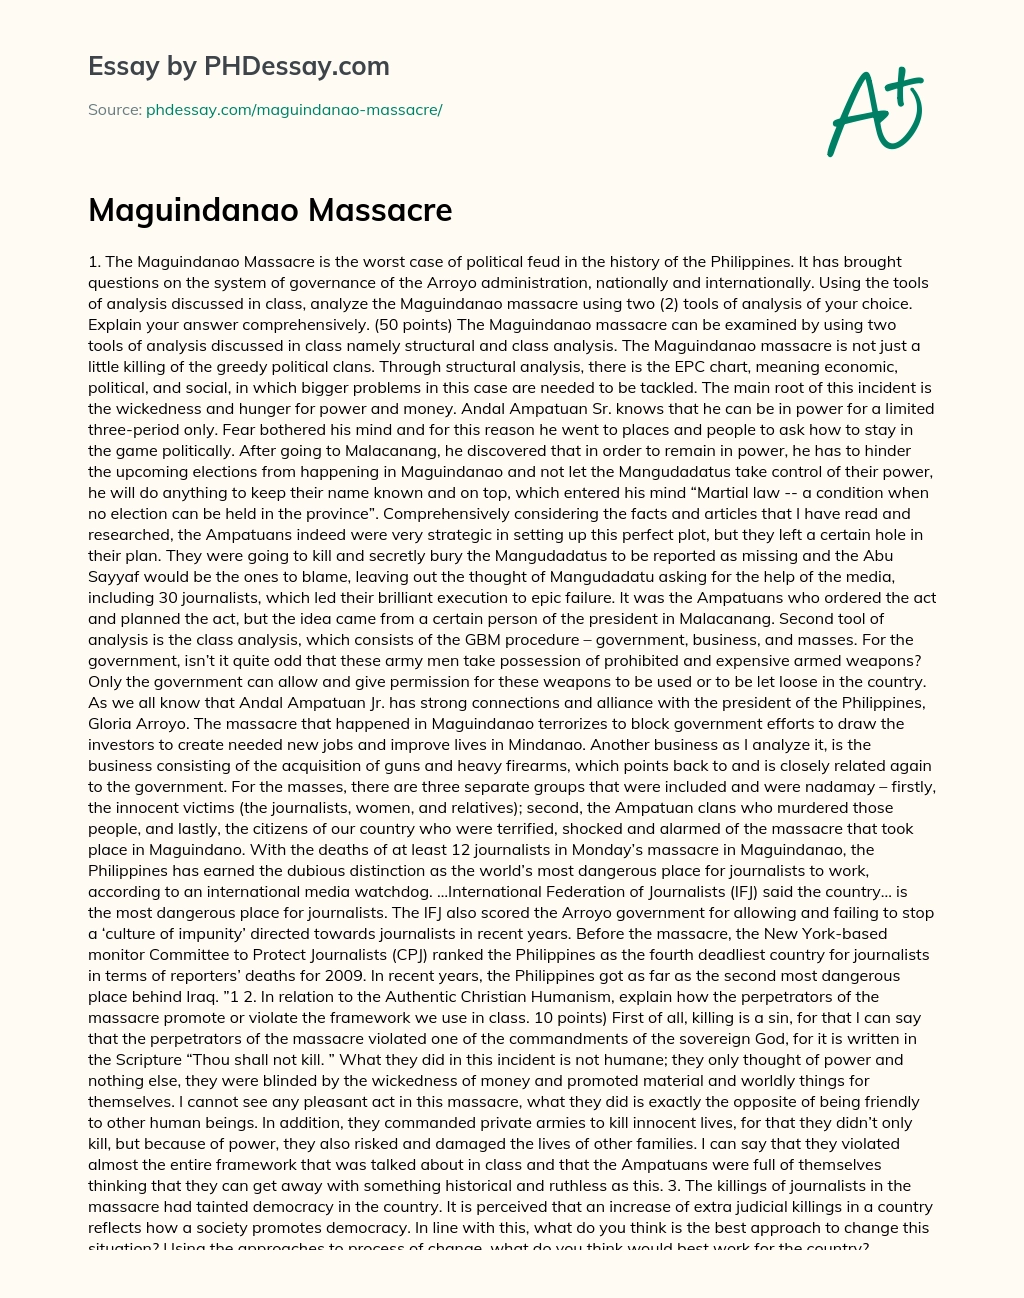 Maguindanao Massacre essay